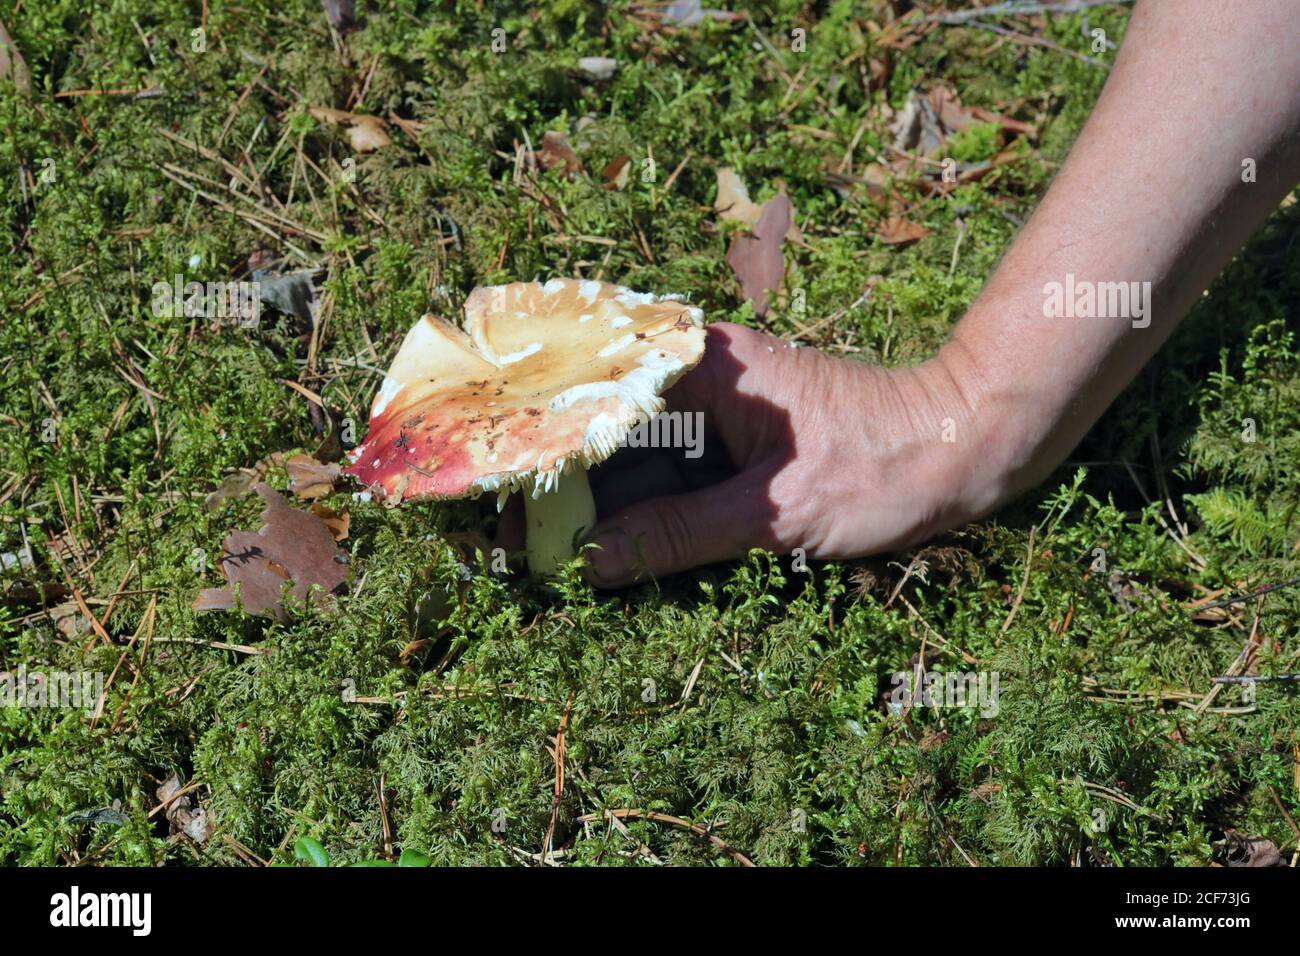 A mushroom picker found a fresh russula mushroom in a forest glade macro Stock Photo